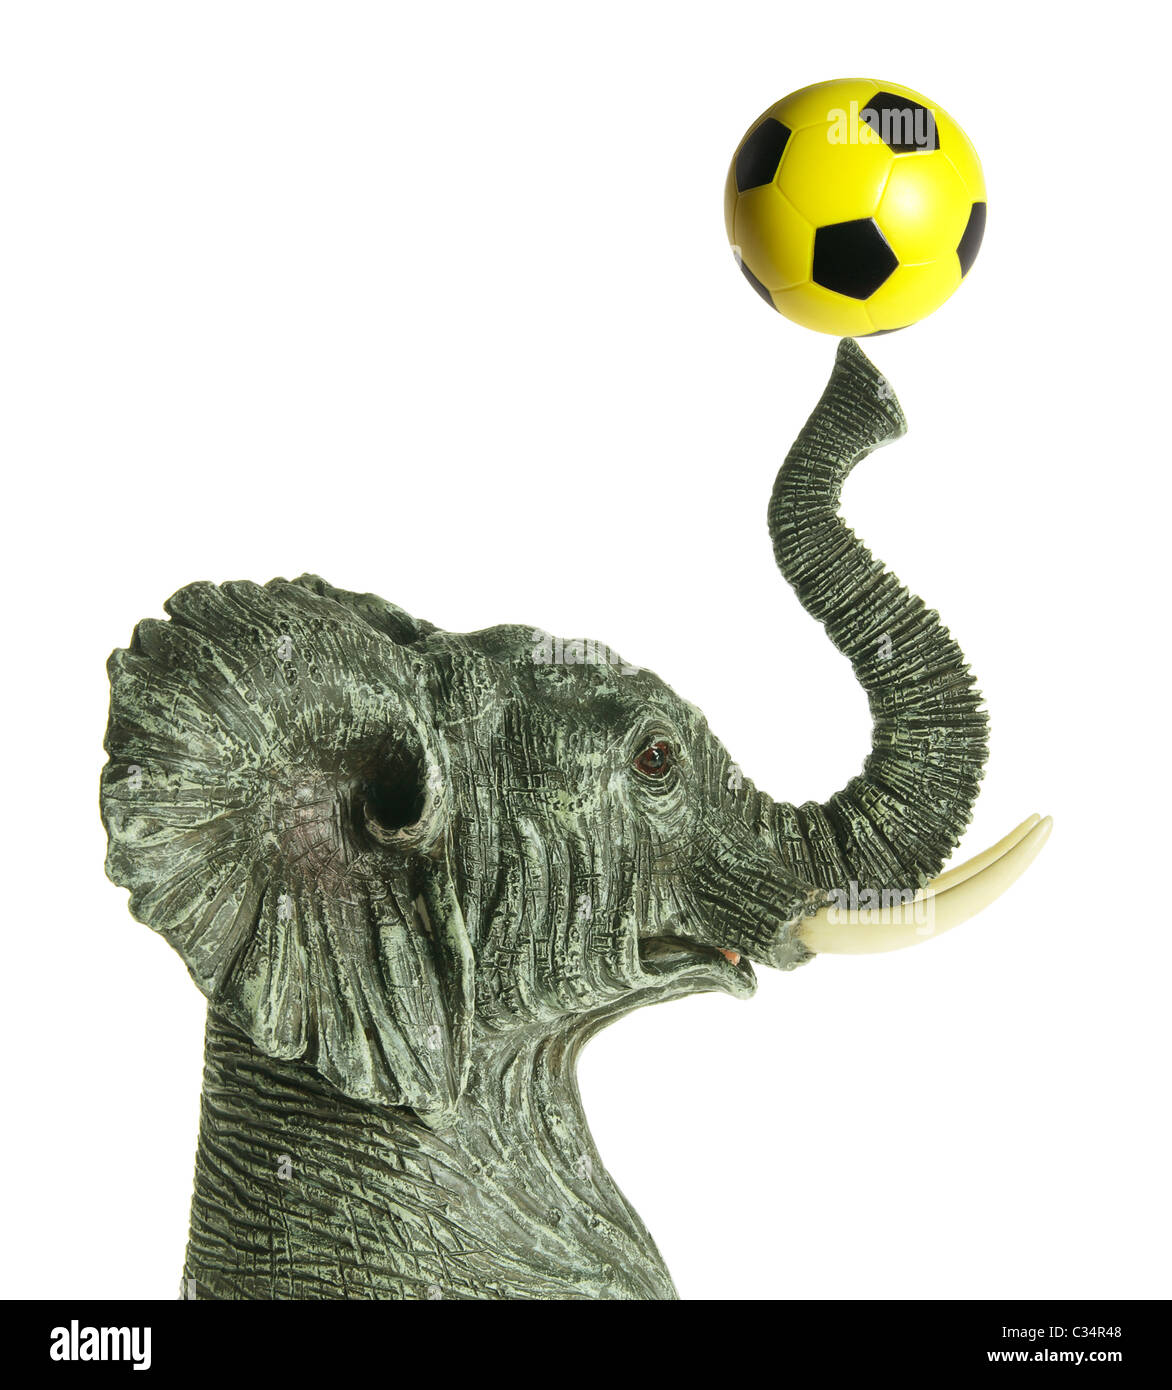 Elephant Figurine with Soccer Ball Stock Photo